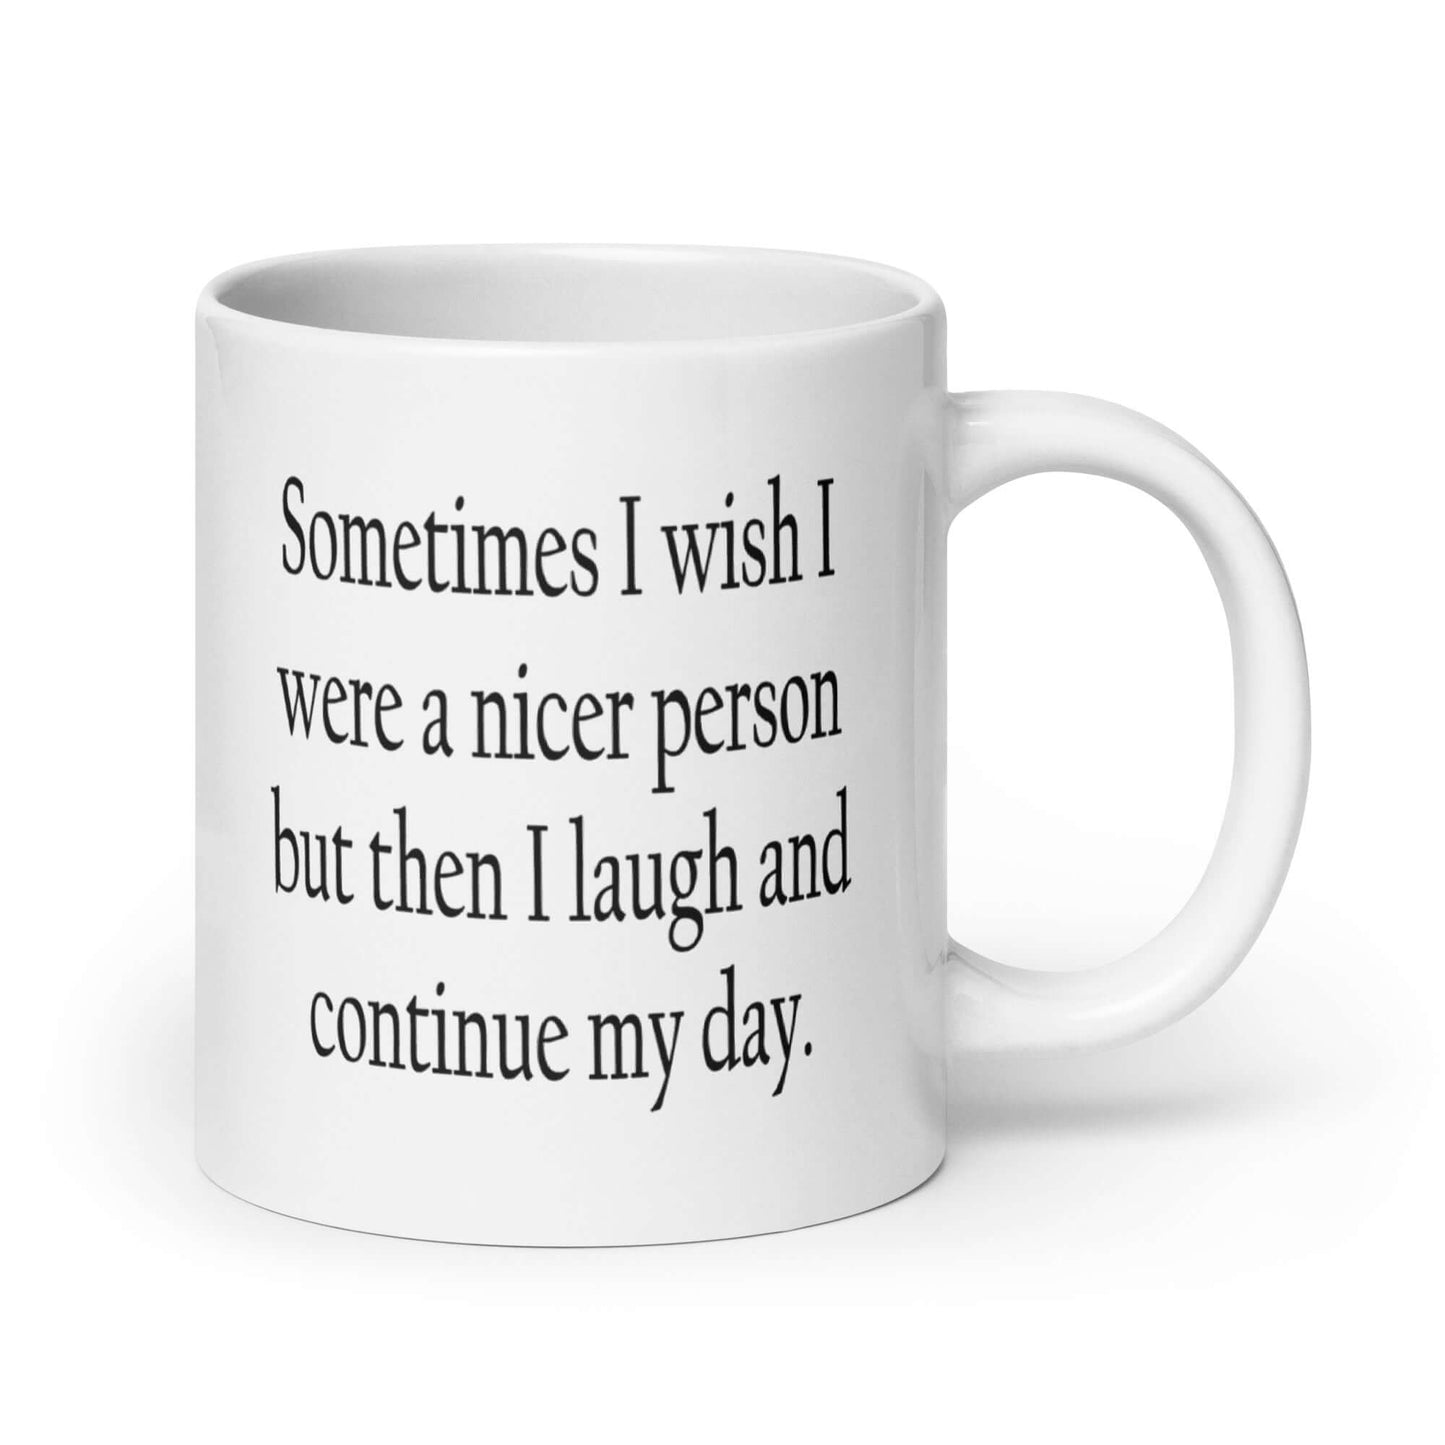 Sometimes I wish I was a nicer person funny sarcastic mug